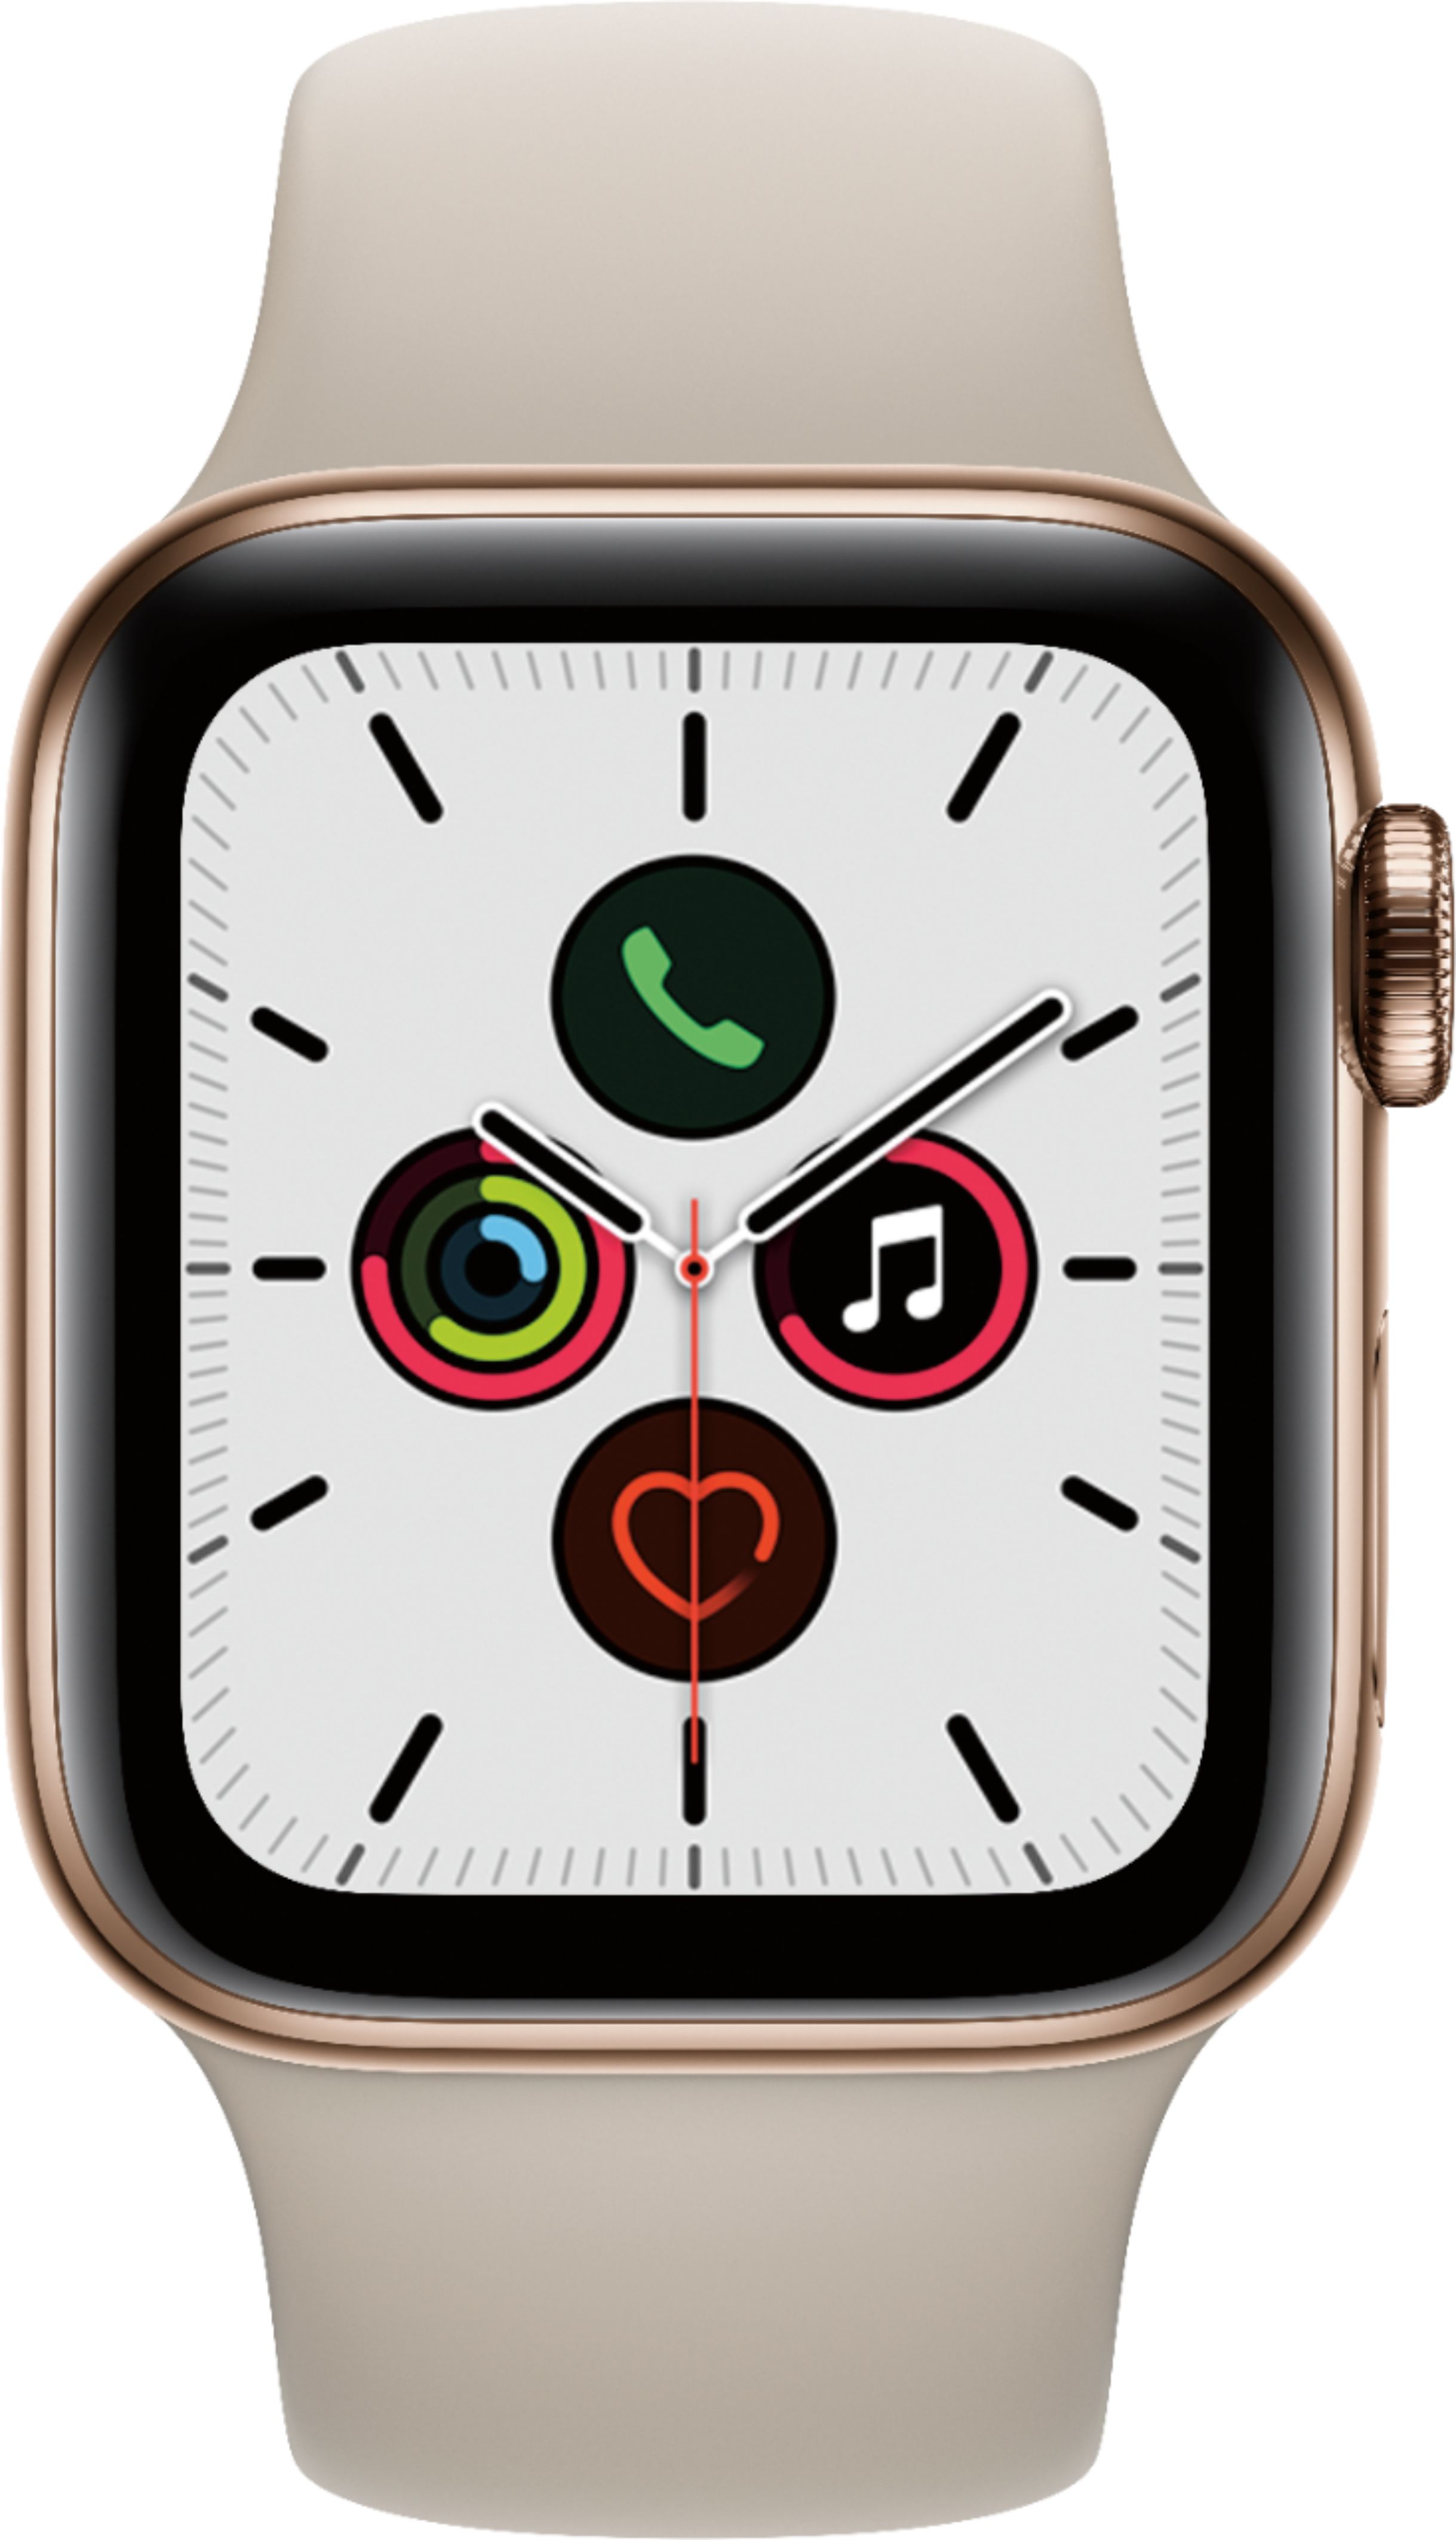 Apple Watch Series 5 (GPS + Cellular) 40mm Gold Stainless Steel Case Apple Watch Stainless Steel Series 5